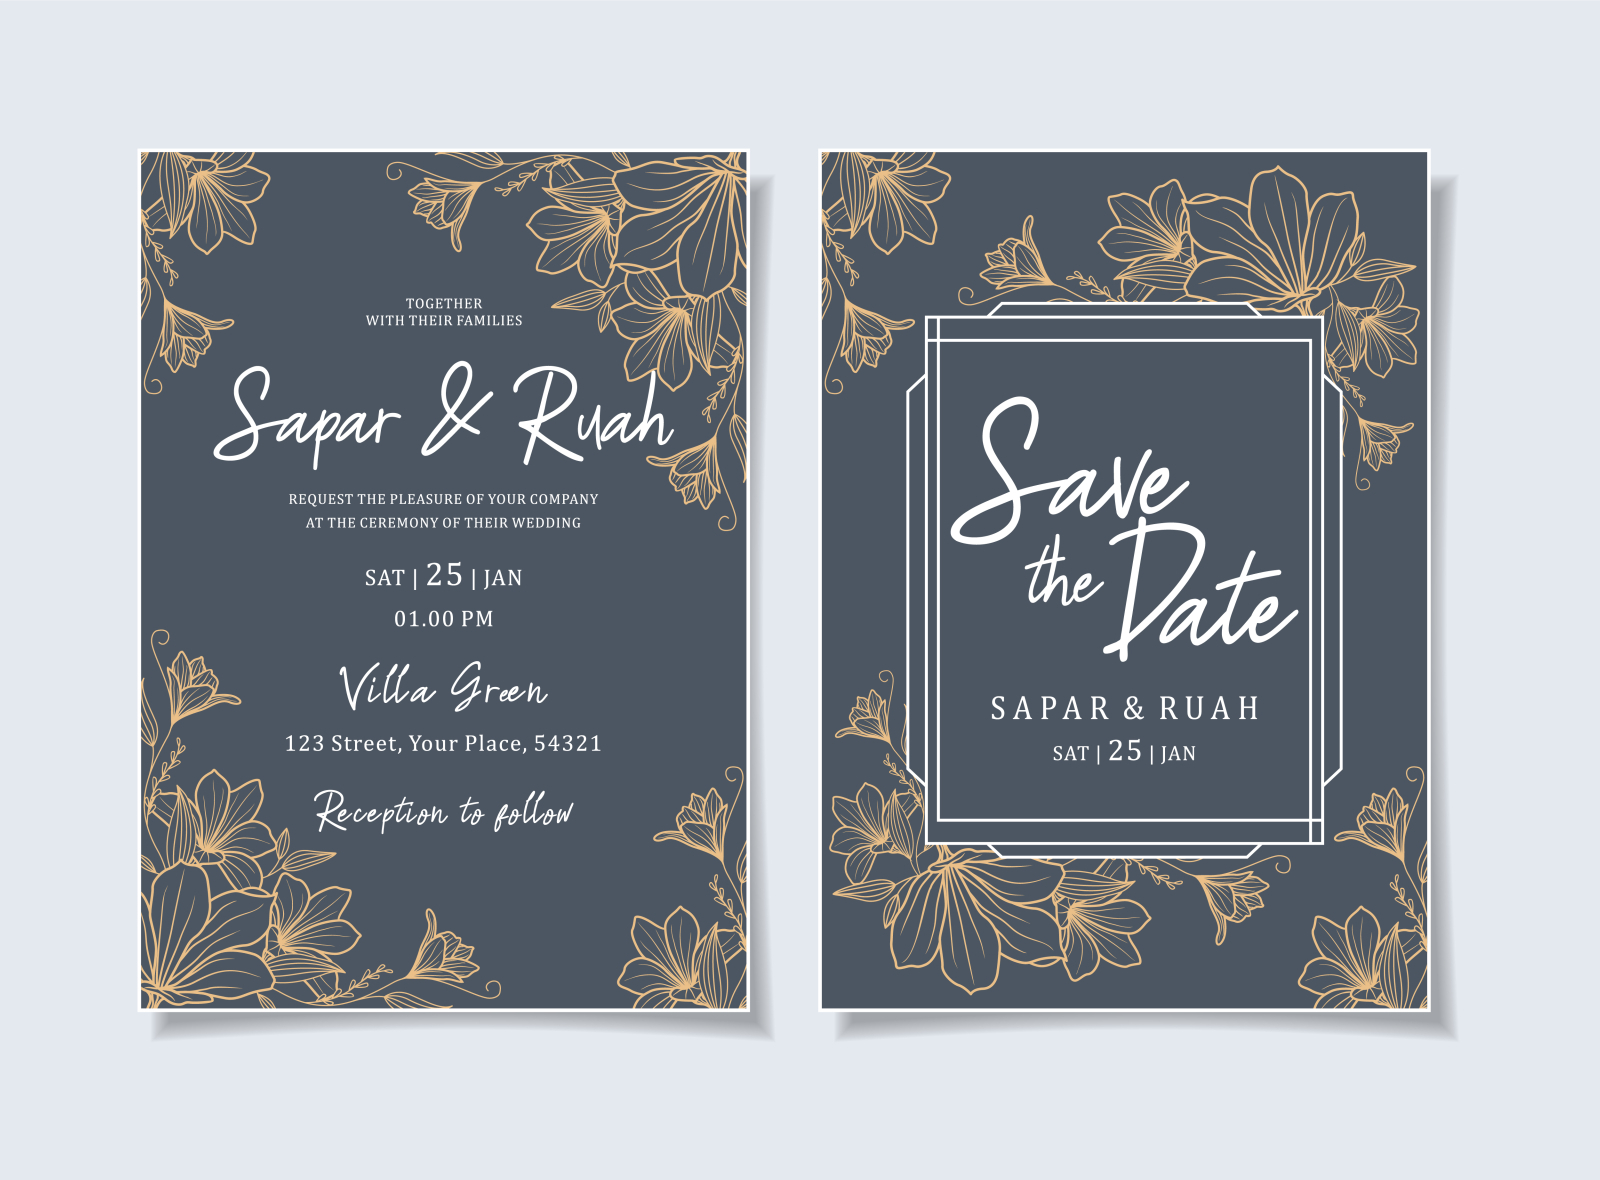 Minimal Sketch Floral Wedding Invitation Suite - Corporate Identity Template